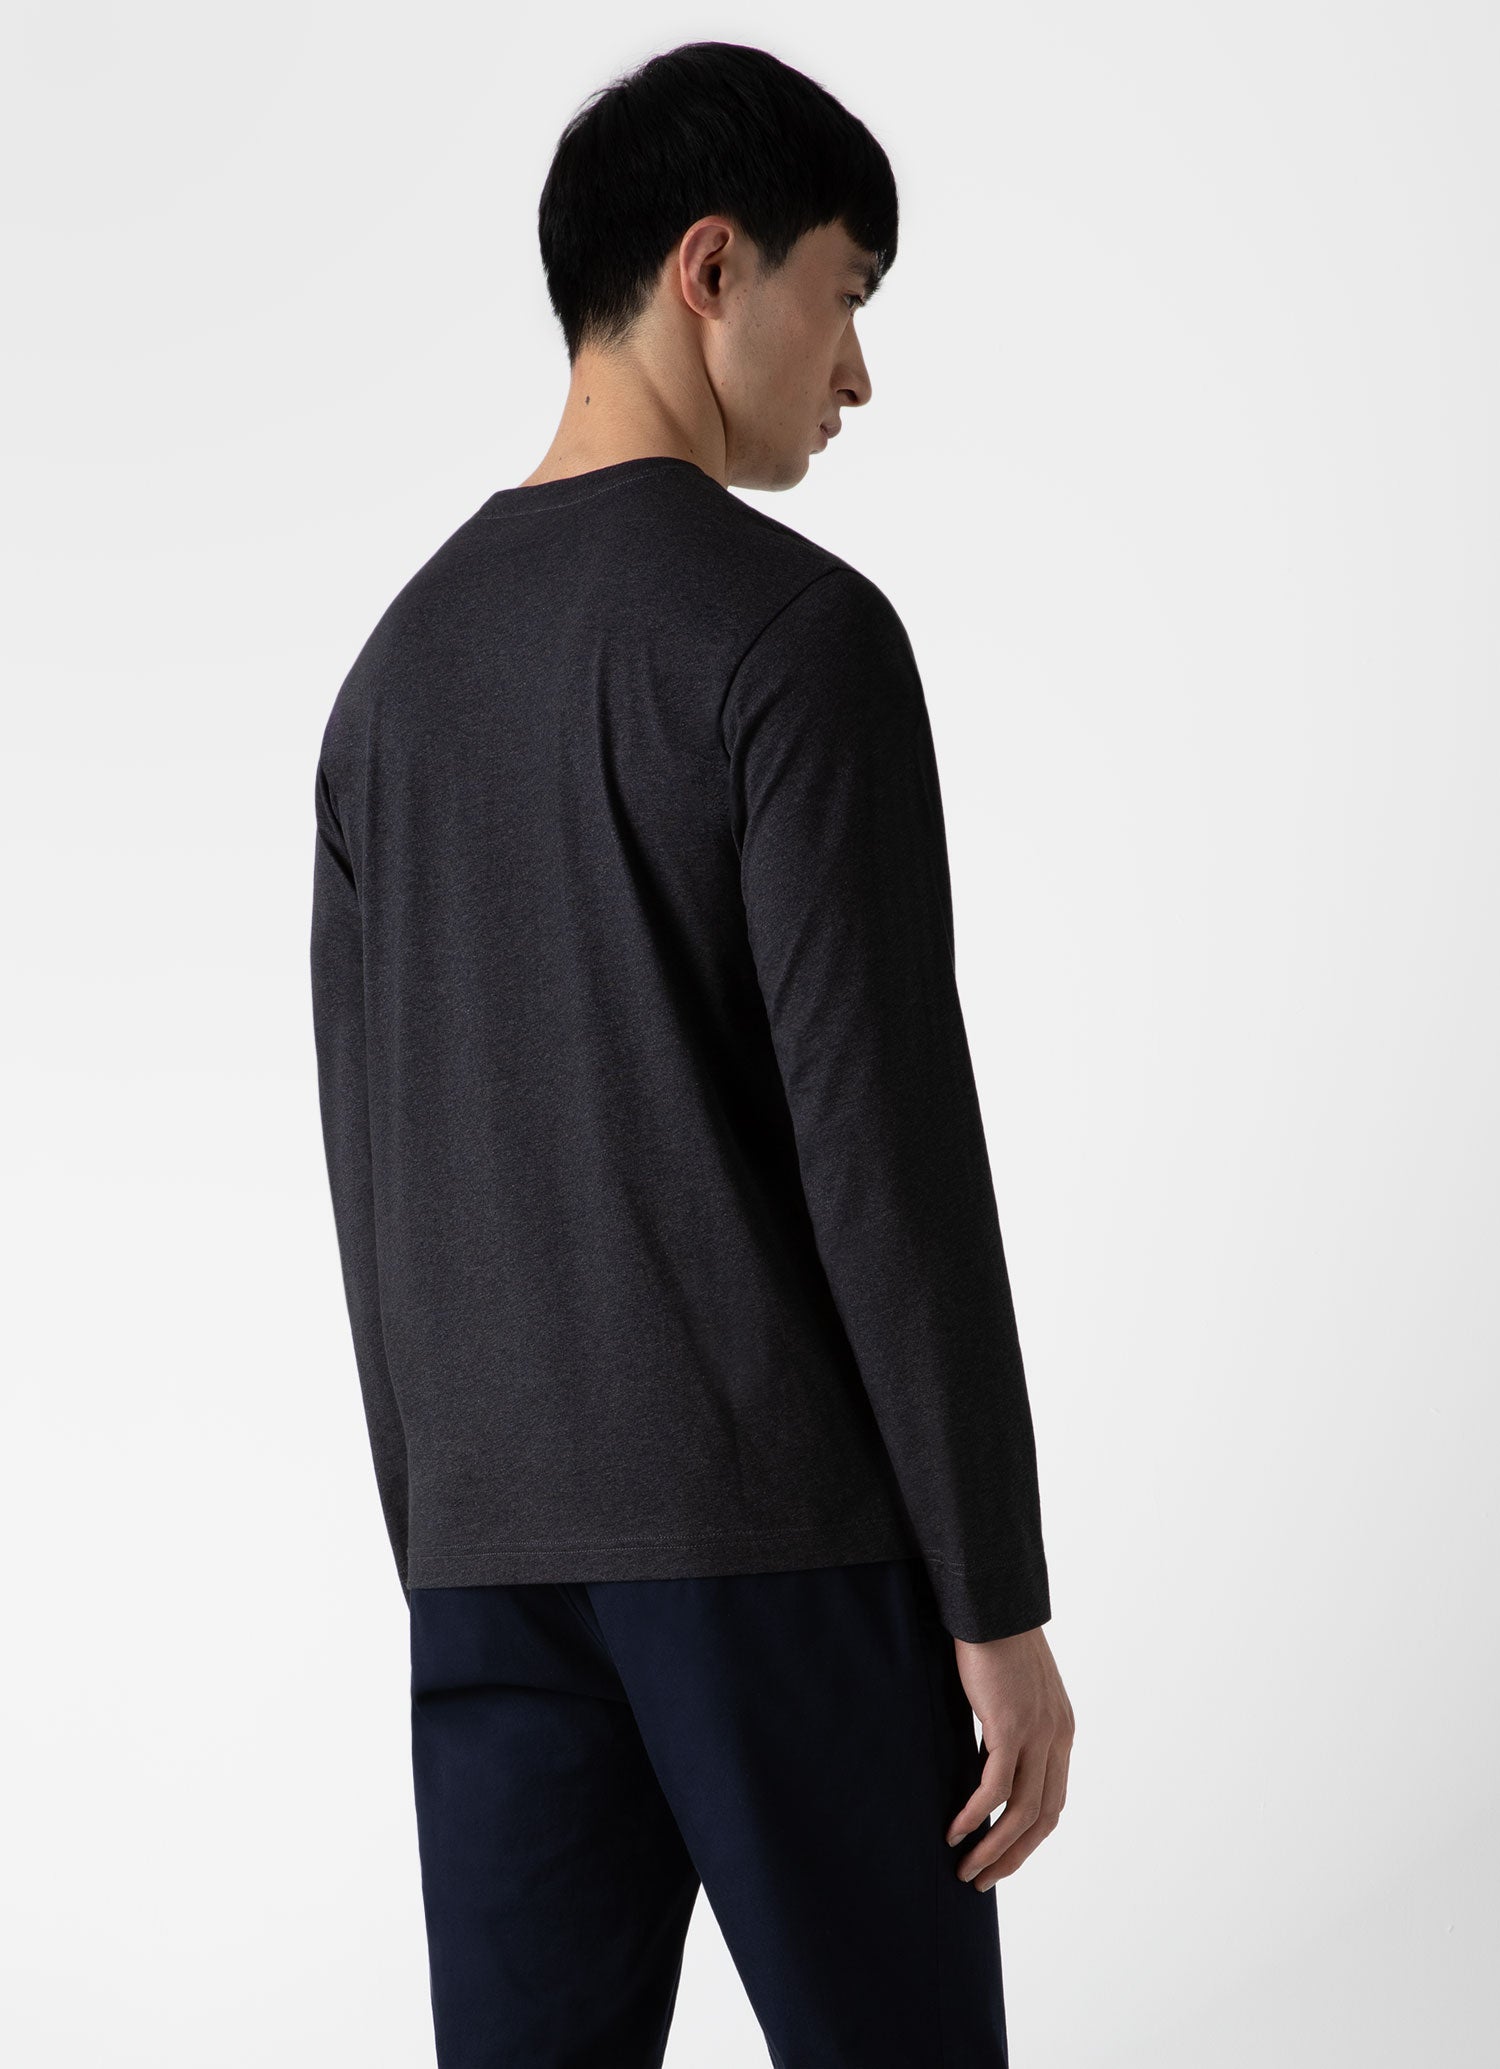 Men's Long Sleeve Riviera T-shirt in Charcoal Melange